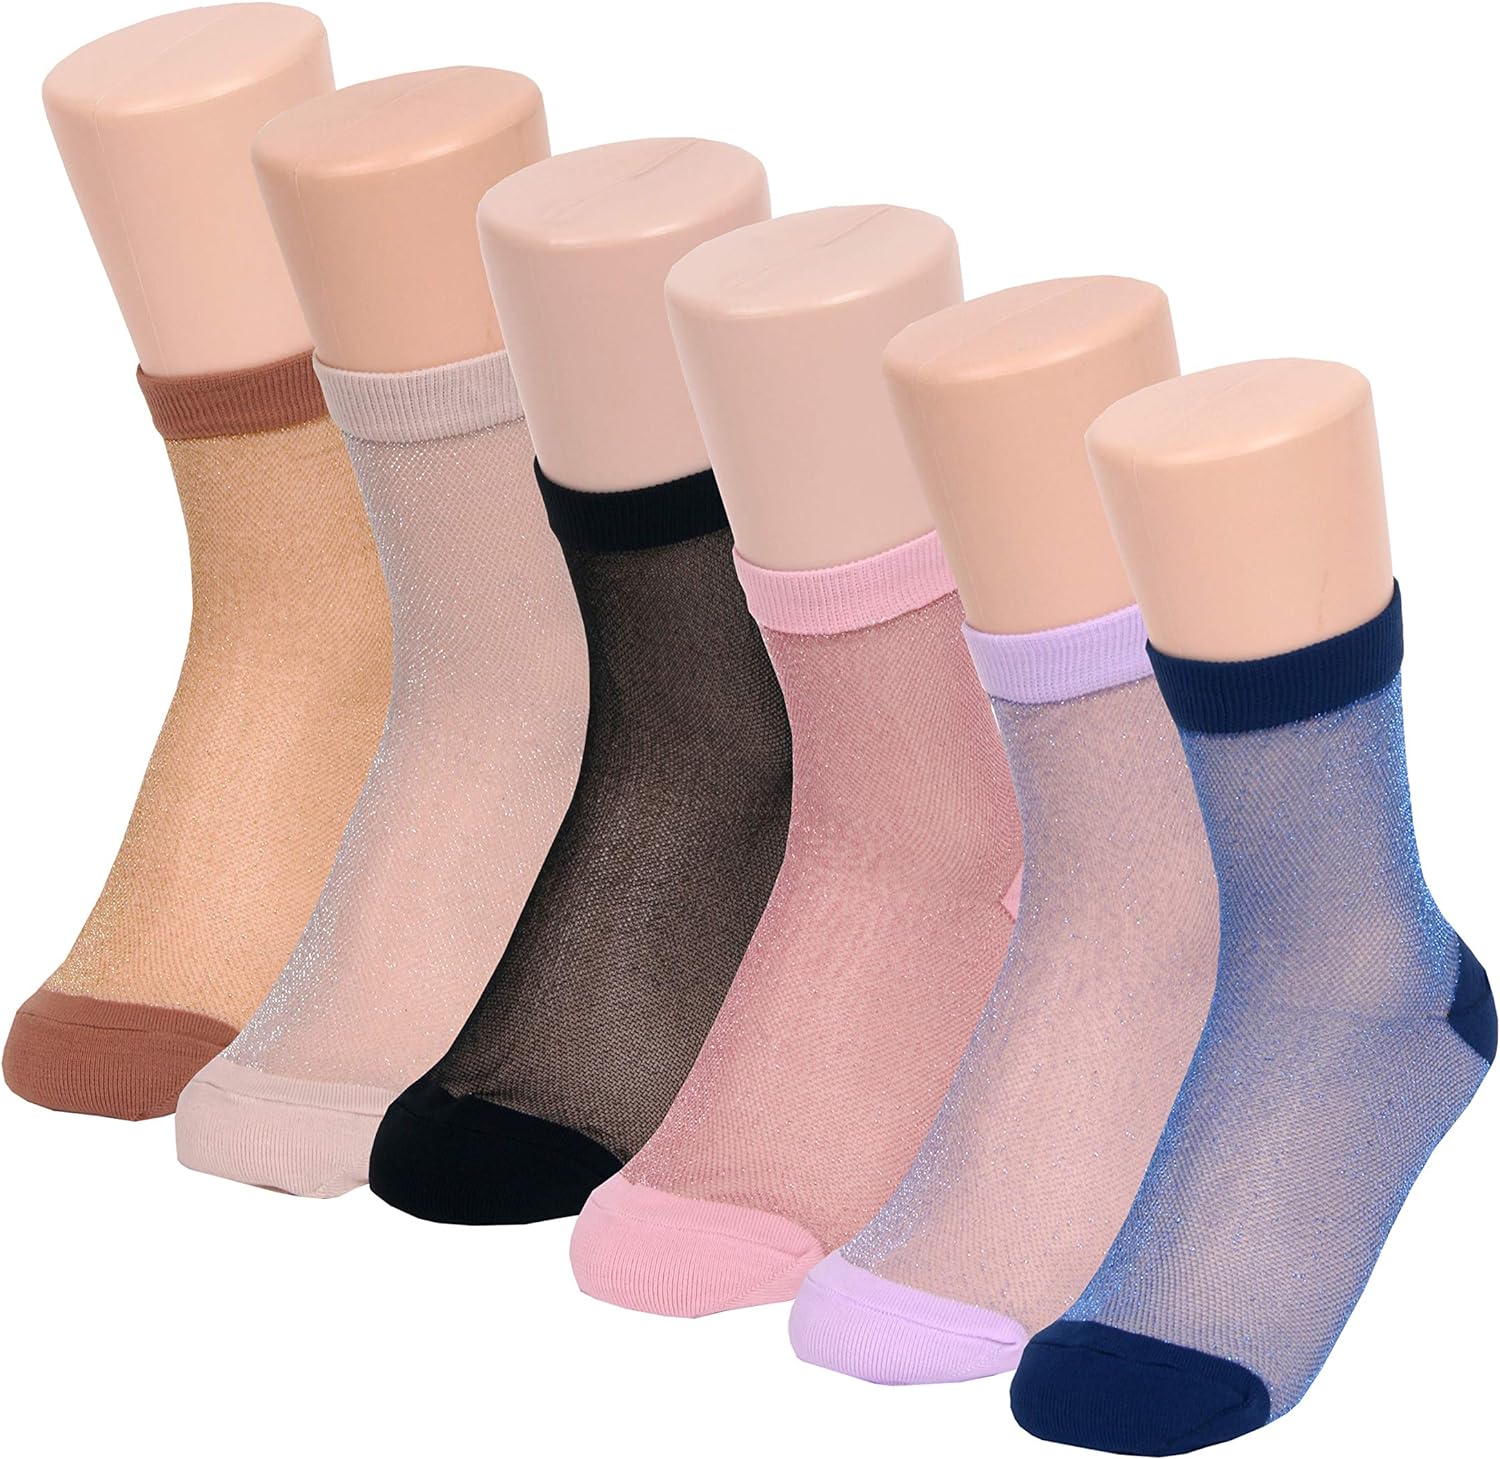 6 Pairs Glitter Sheer Mesh Transparent Socks Women - Ultrathin See Through Lace Elastic Ankle Socks